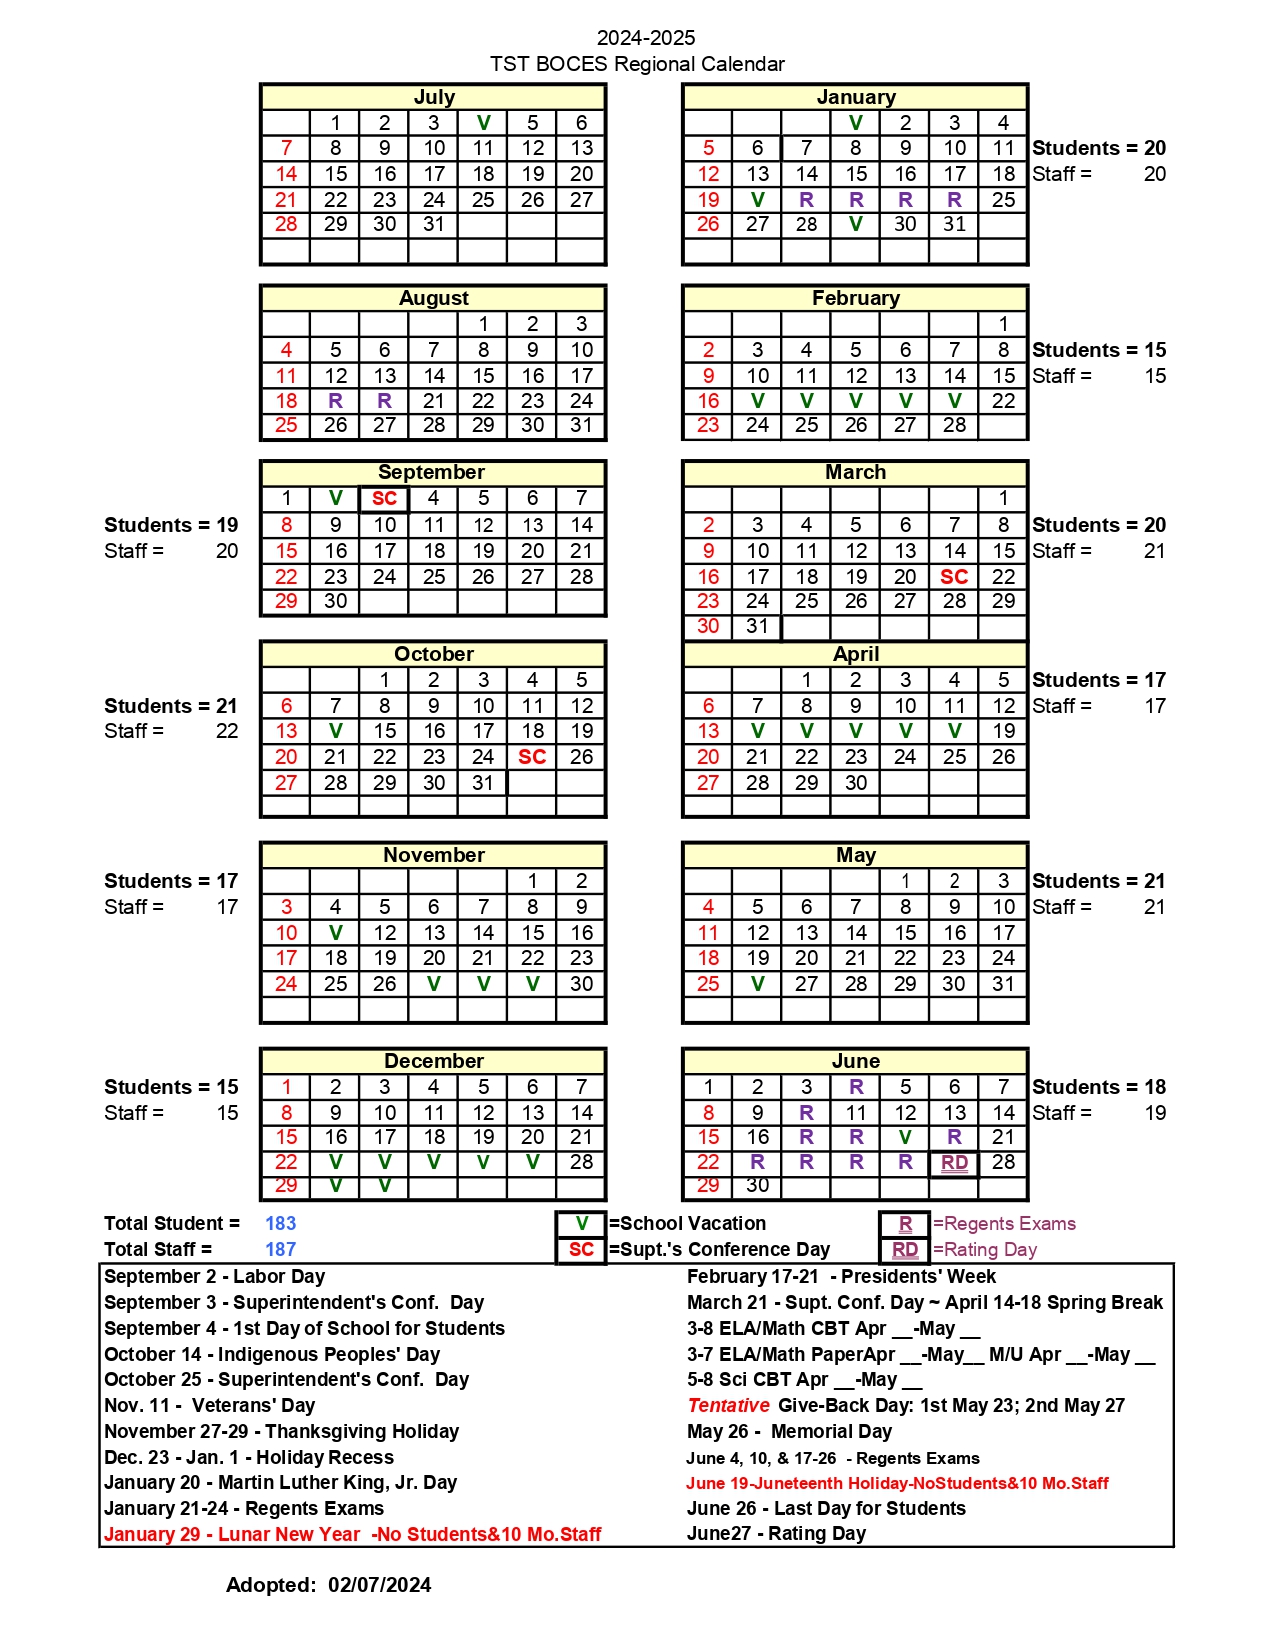 Regional Calendar 24-25